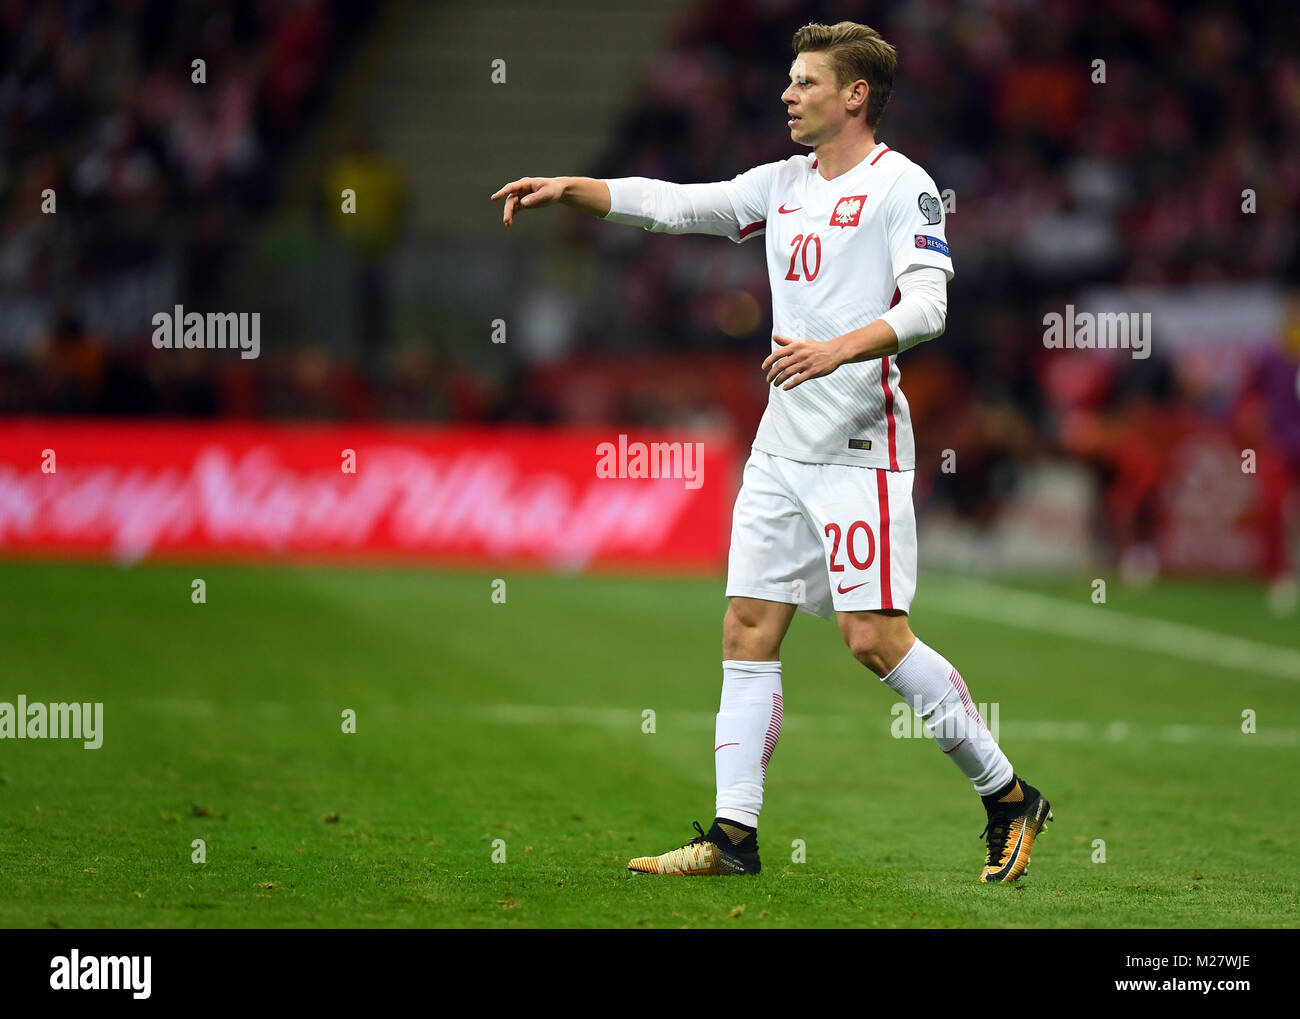 8 Oktober, 2017 - Warschau, Polen: Fußball WM 2018 Qualifikation Rusia Polen - Montenegro o/p Lukasz Piszczek (Polen) Stockfoto